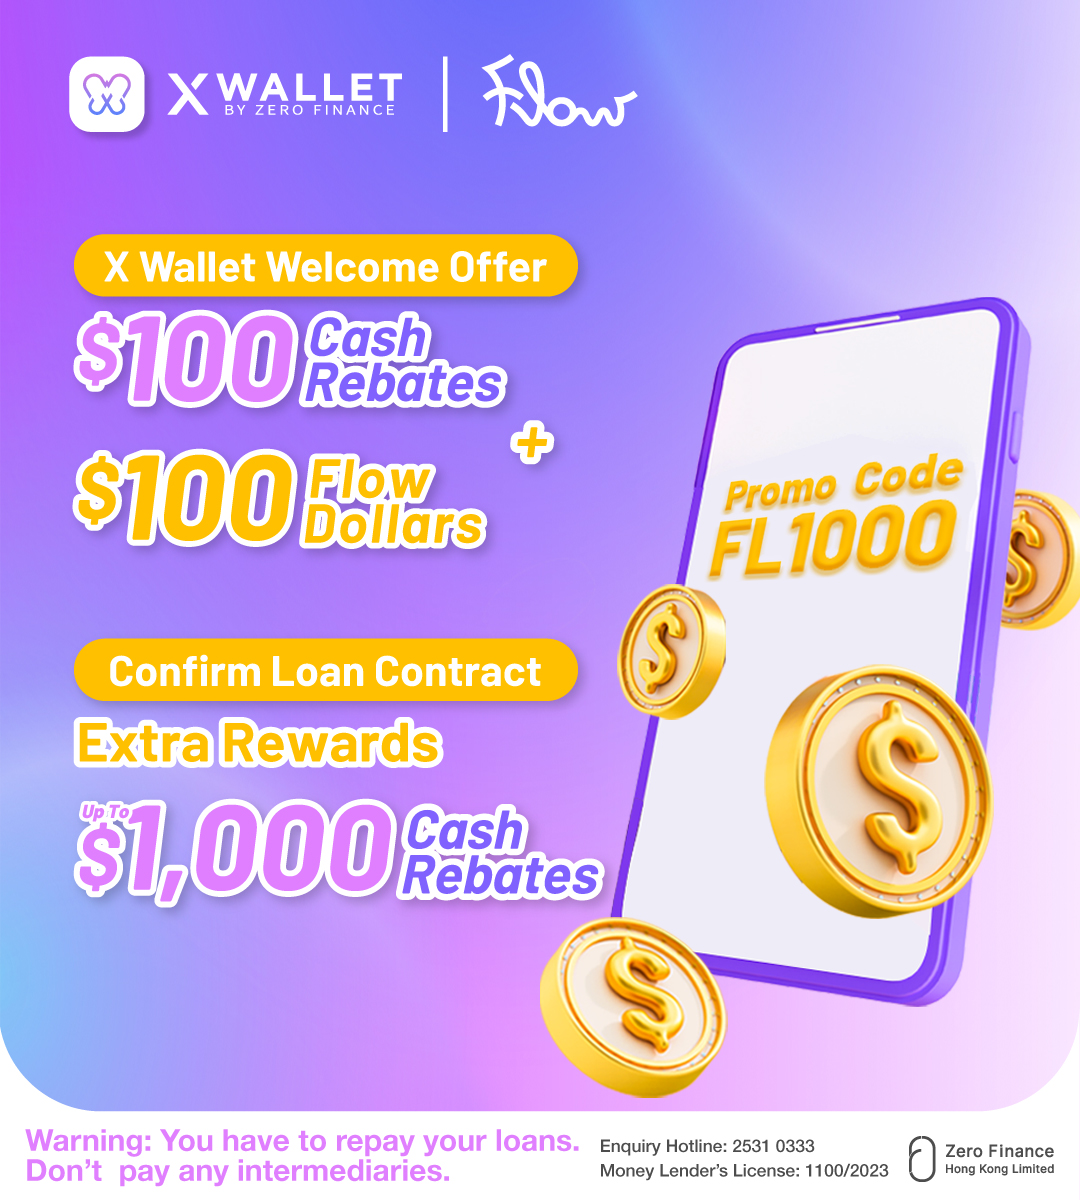 【Extra Welcome Offer】X Wallet New Customers Enjoy $100 Cash Rebate + $100 Flow Dollars & $1000 Cash Rebate